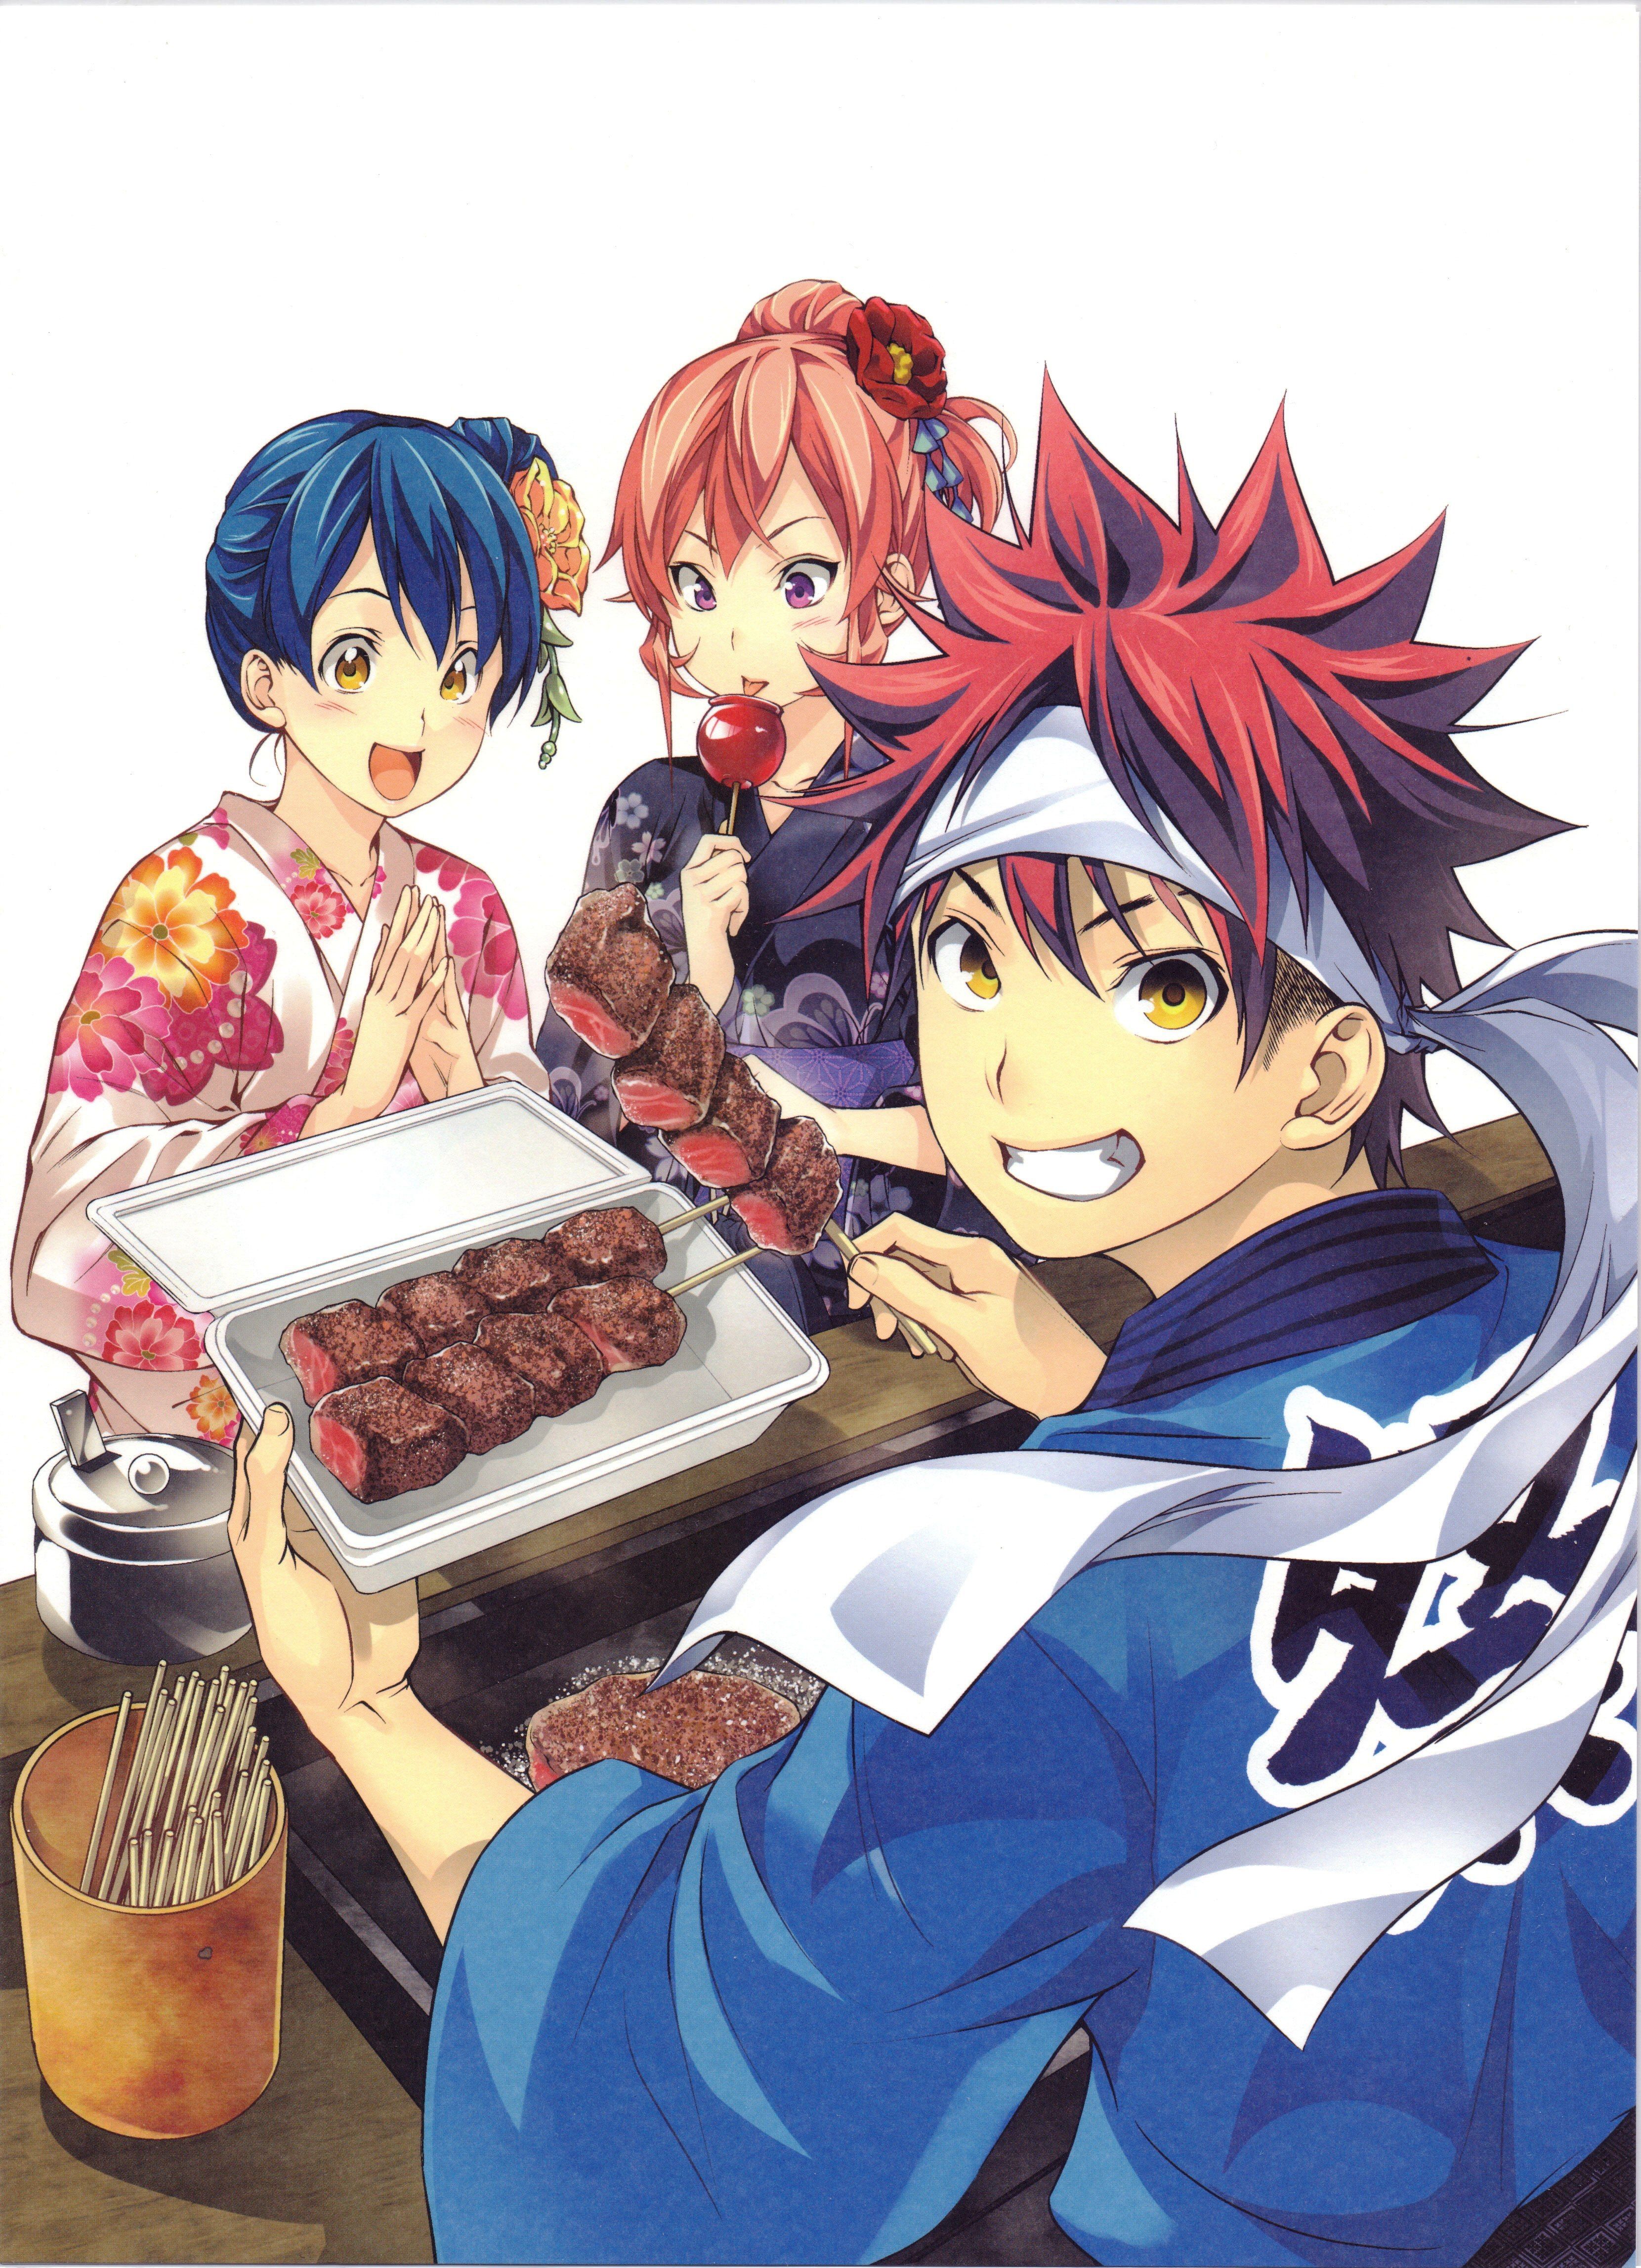 Shokugeki no Souma (Food Wars!), Mobile Wallpaper Anime